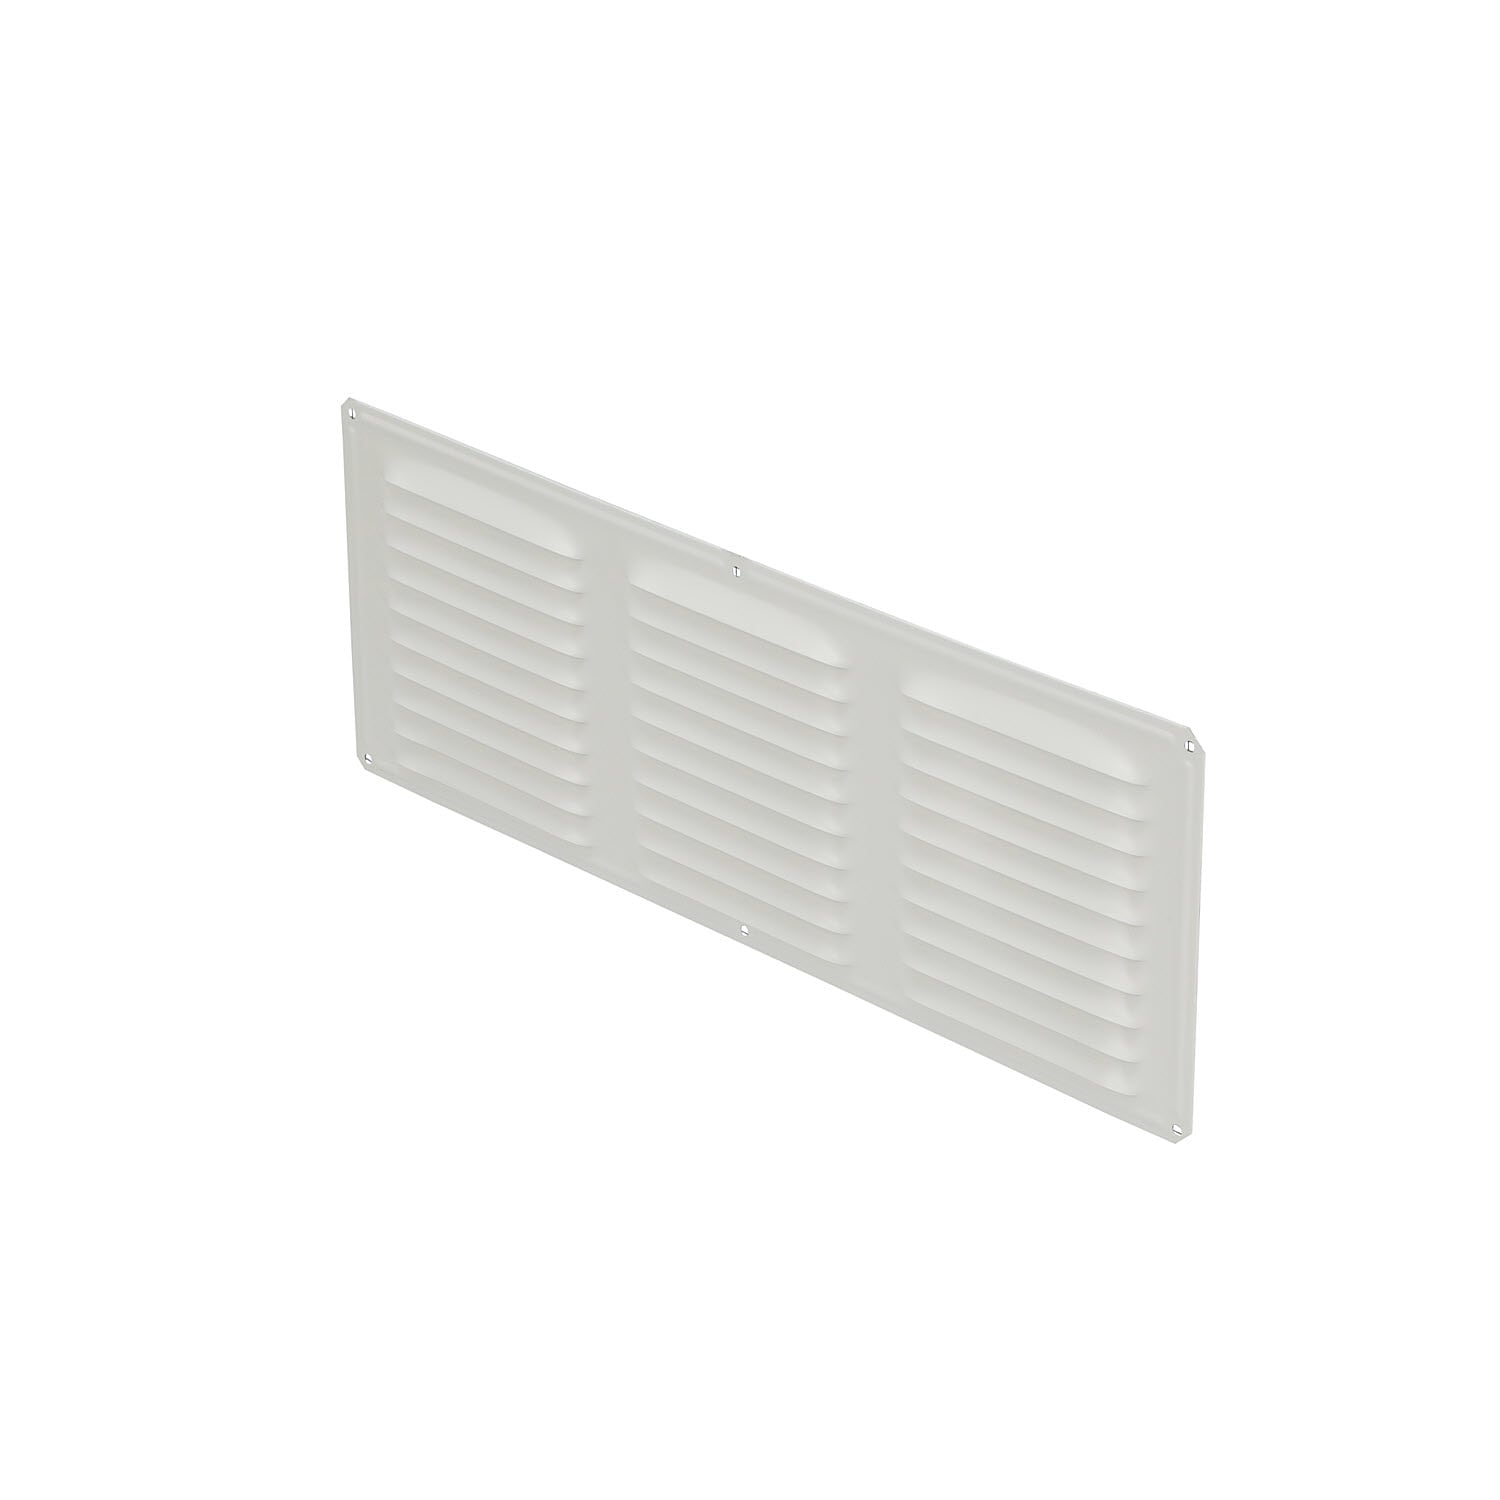 Air Vent 8"x16" WHITE Aluminum UNDER EAVE VENT Sidewall Attic Ventilation 84211 